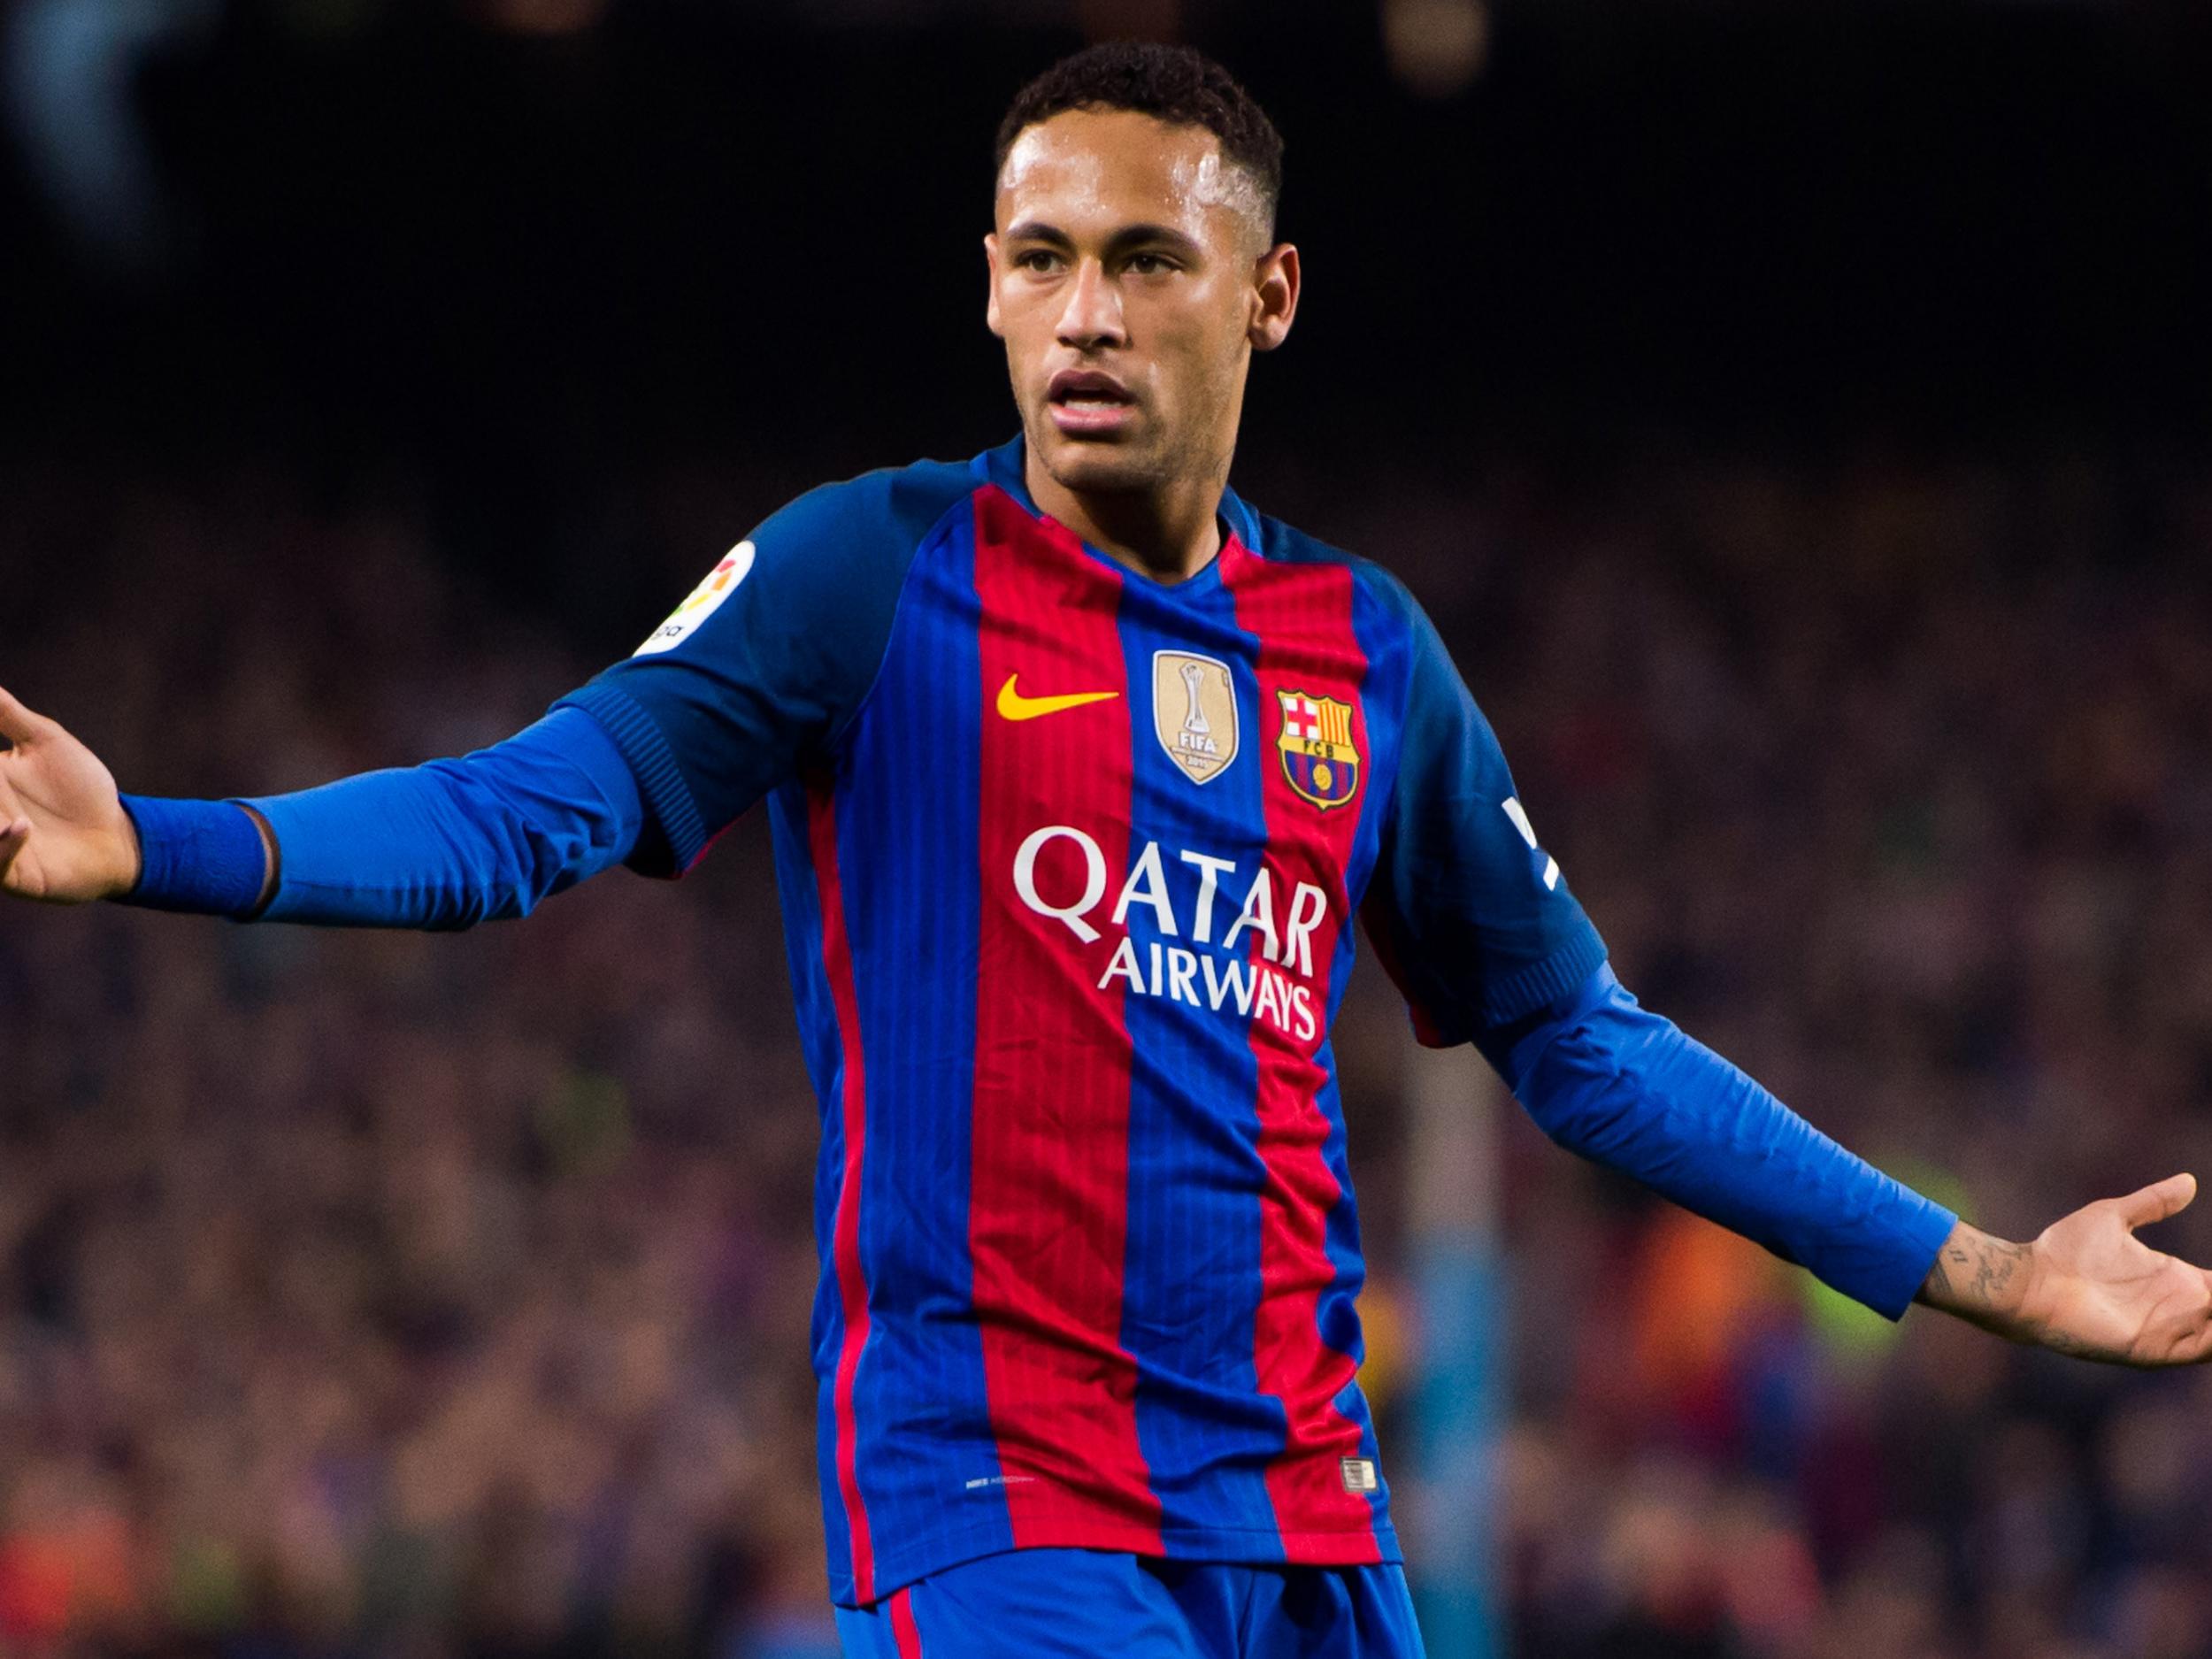 Neymar ended up joining Barcelona despite completing his Real Madrid medical